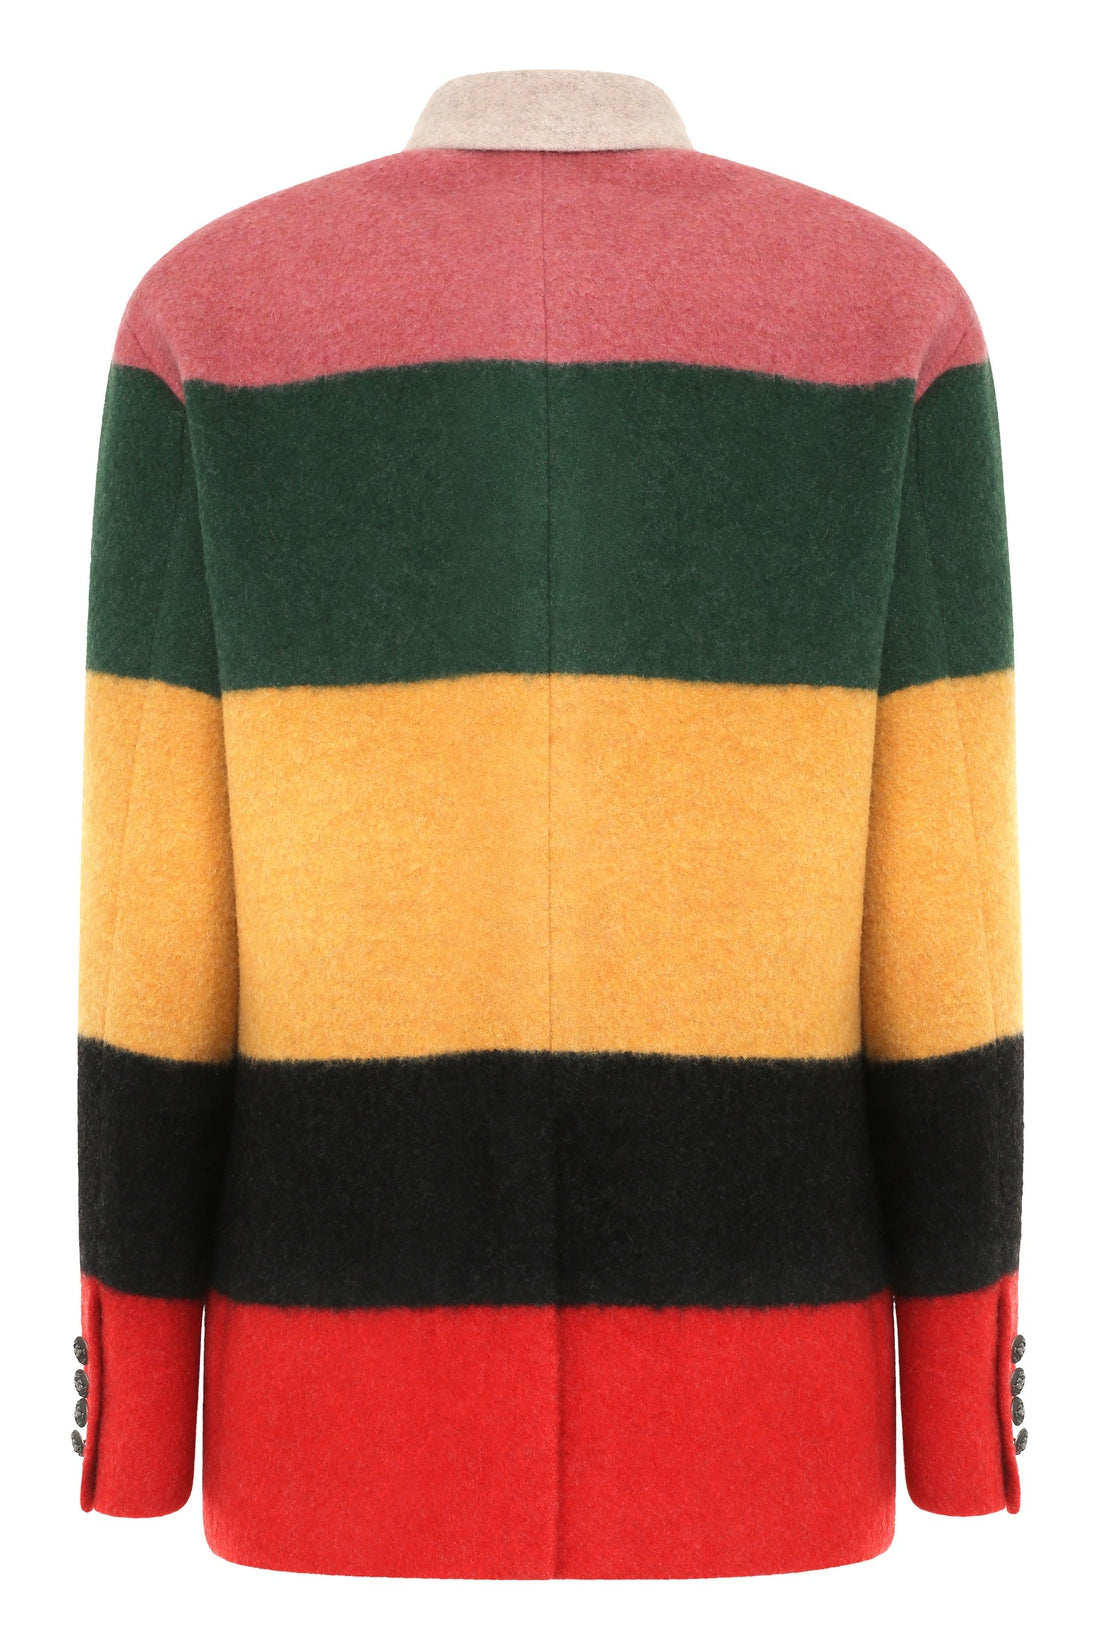 Etro-OUTLET-SALE-Striped wool coat-ARCHIVIST